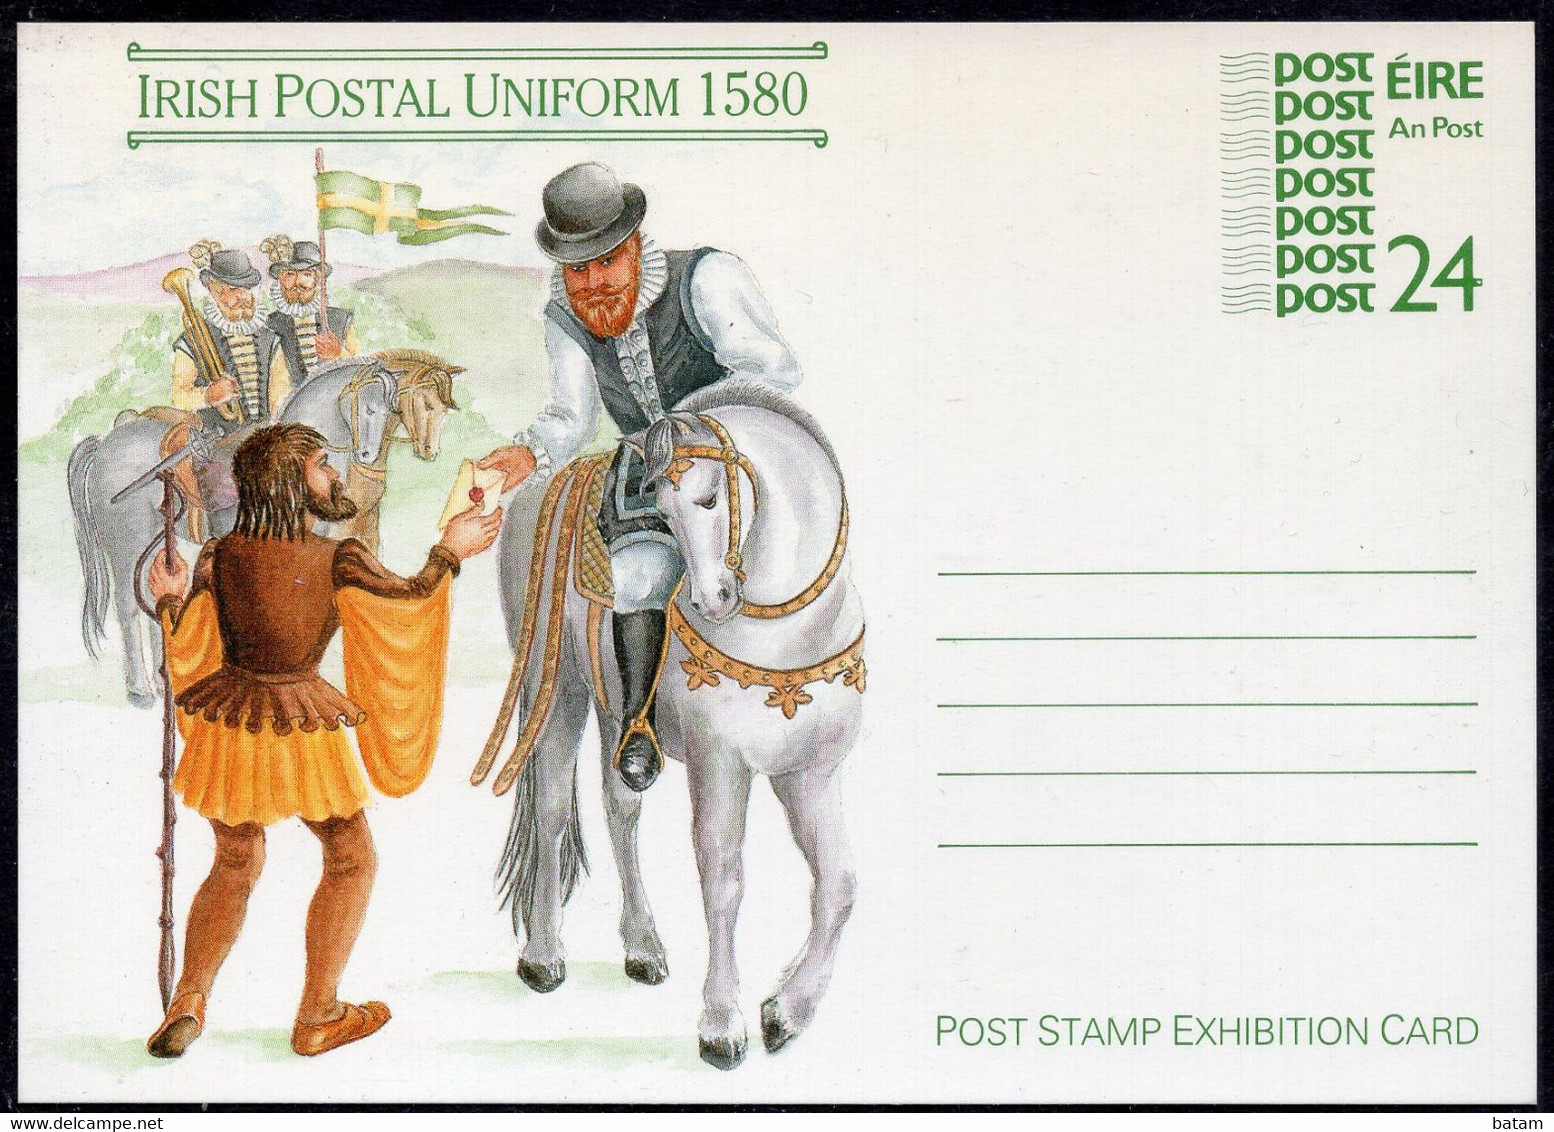 111 - Ireland - Irish Postal Uniform 1580 - Post Stamp Exhibition Card - Unused - Entiers Postaux